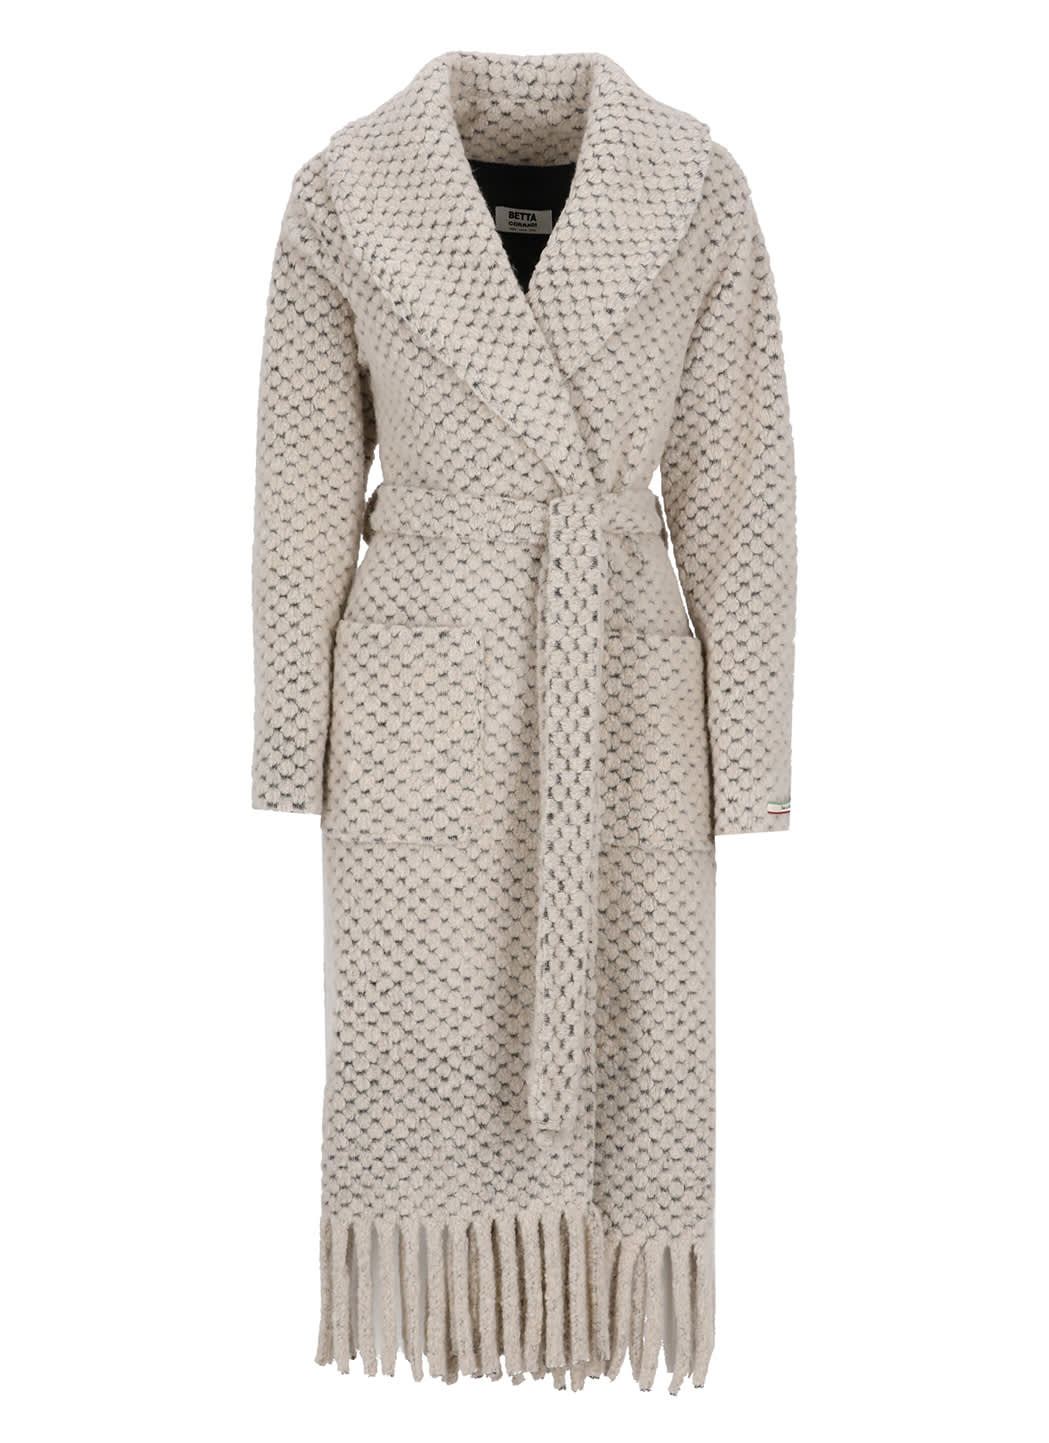 Betta Corradi Wool Coat